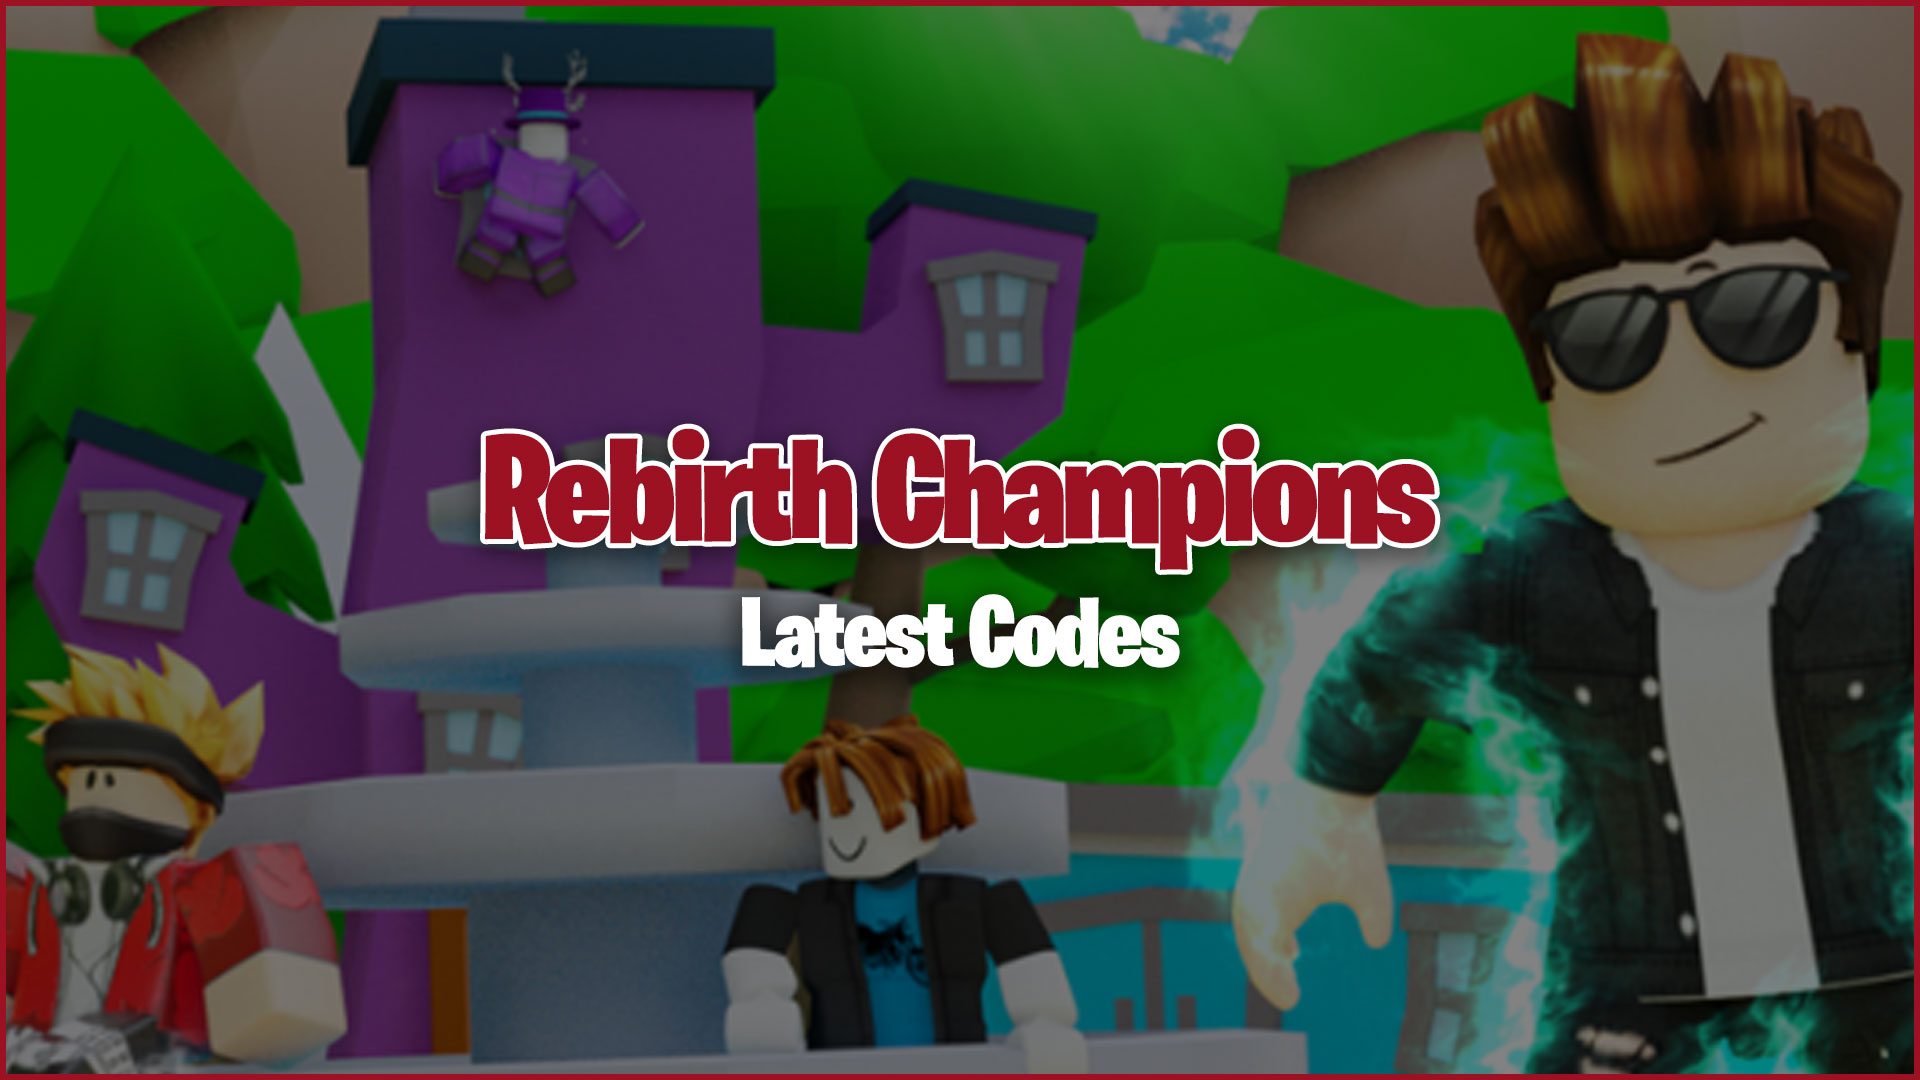 Rebirth Champions X Codes (December 2023) - Roblox